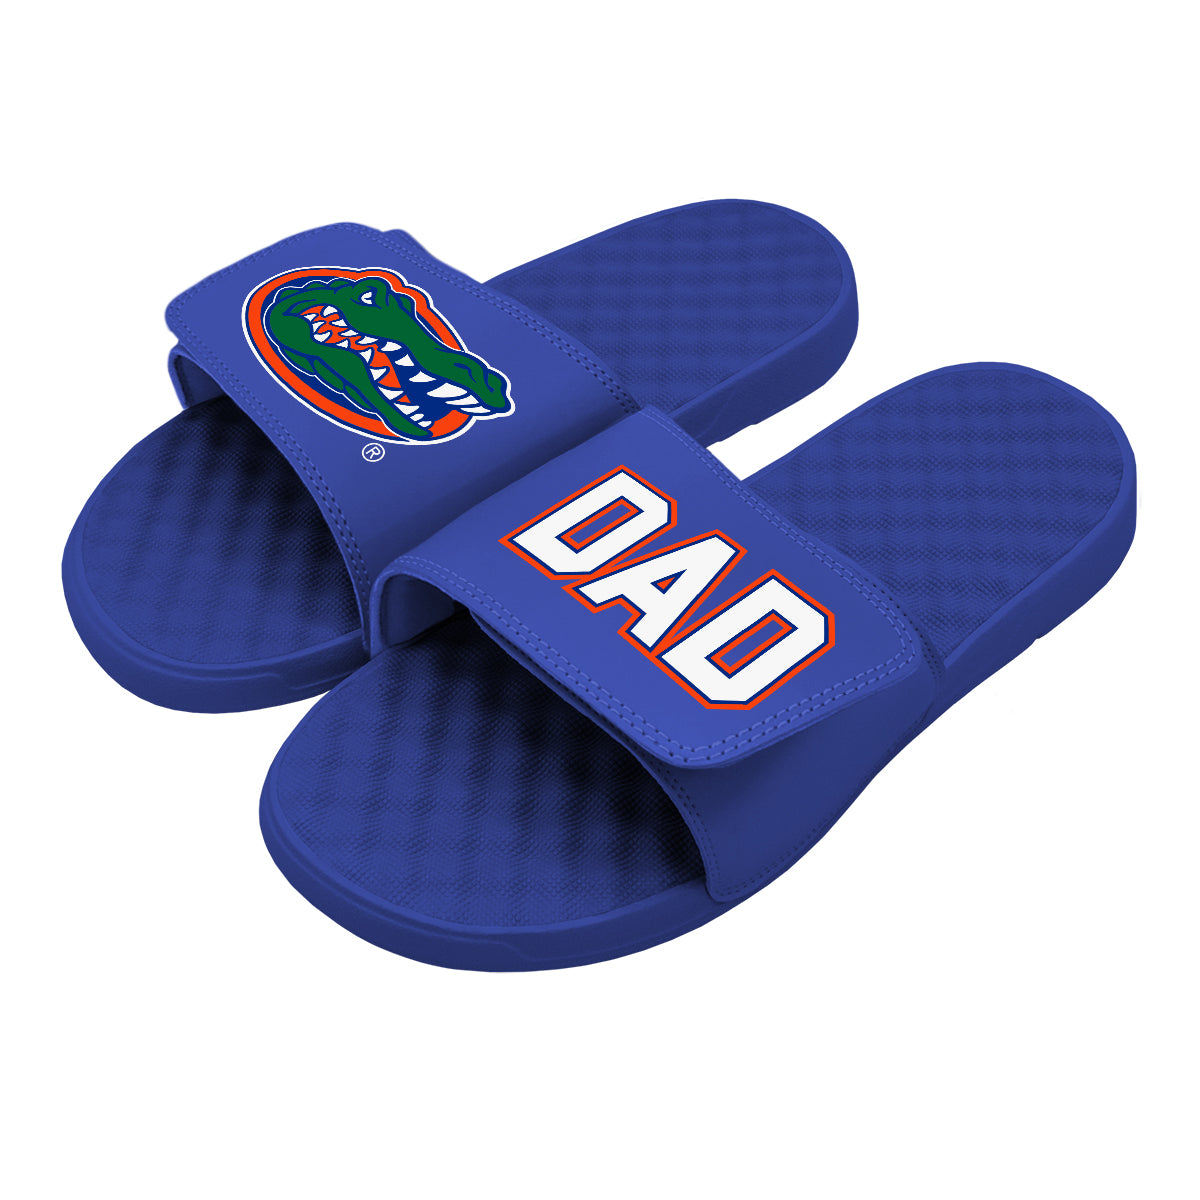 Dad Florida Slides